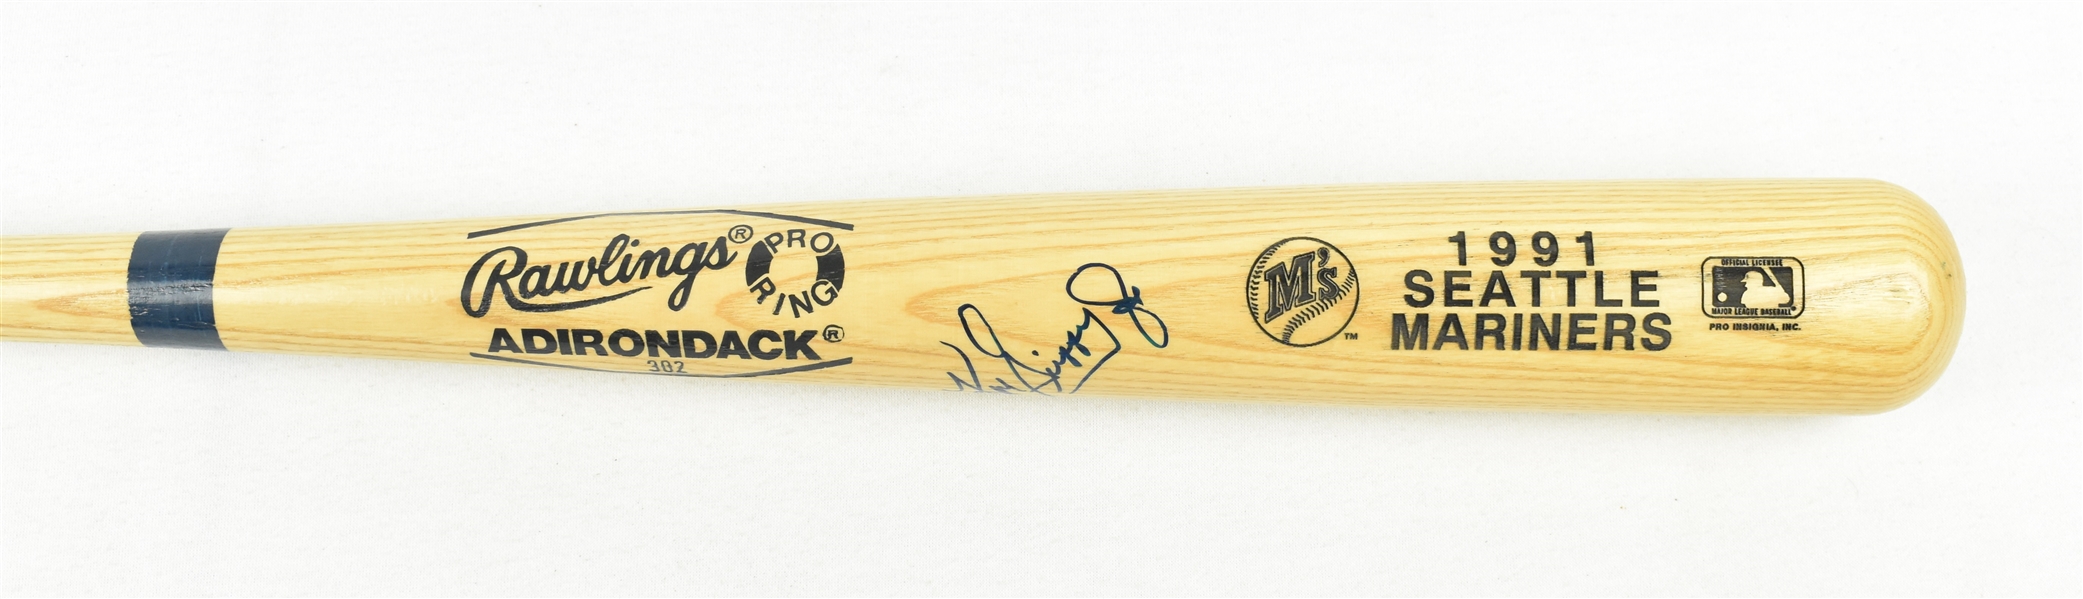 Ken Griffey Jr. Autographed 1991 Seattle Mariners Bat